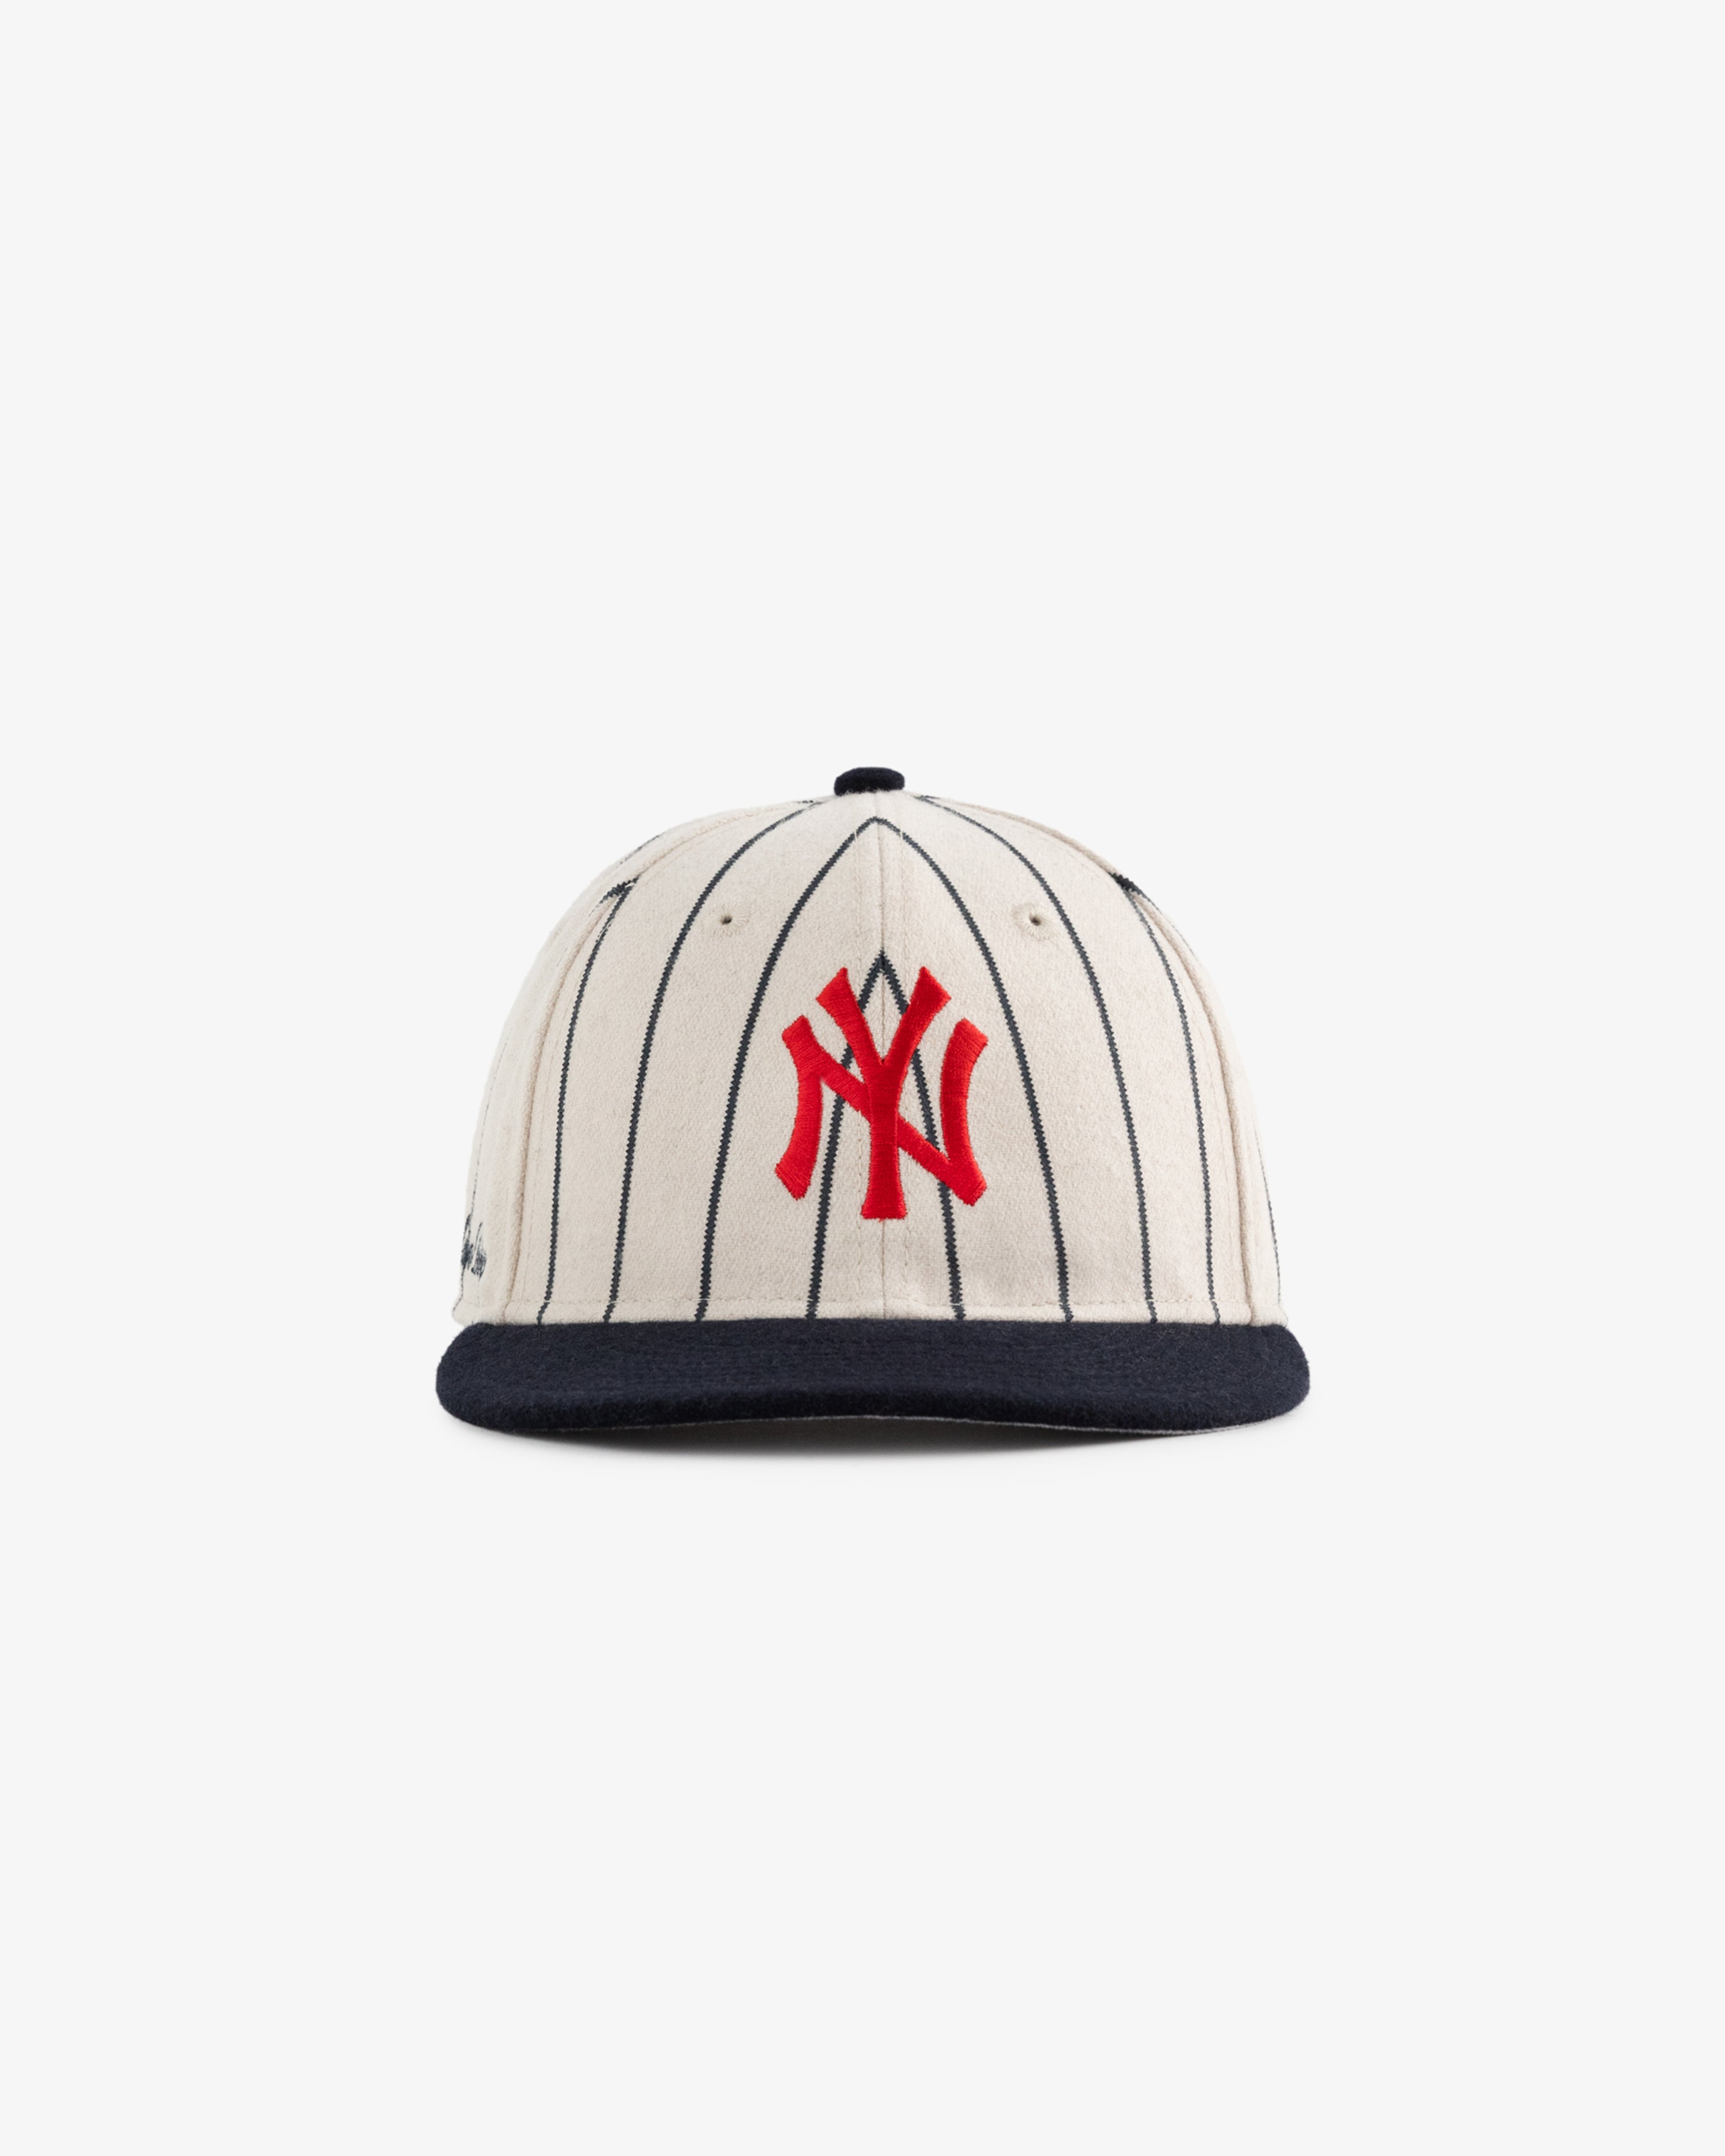 ALD / New Era Wool Yankees Hat 9fifty RC